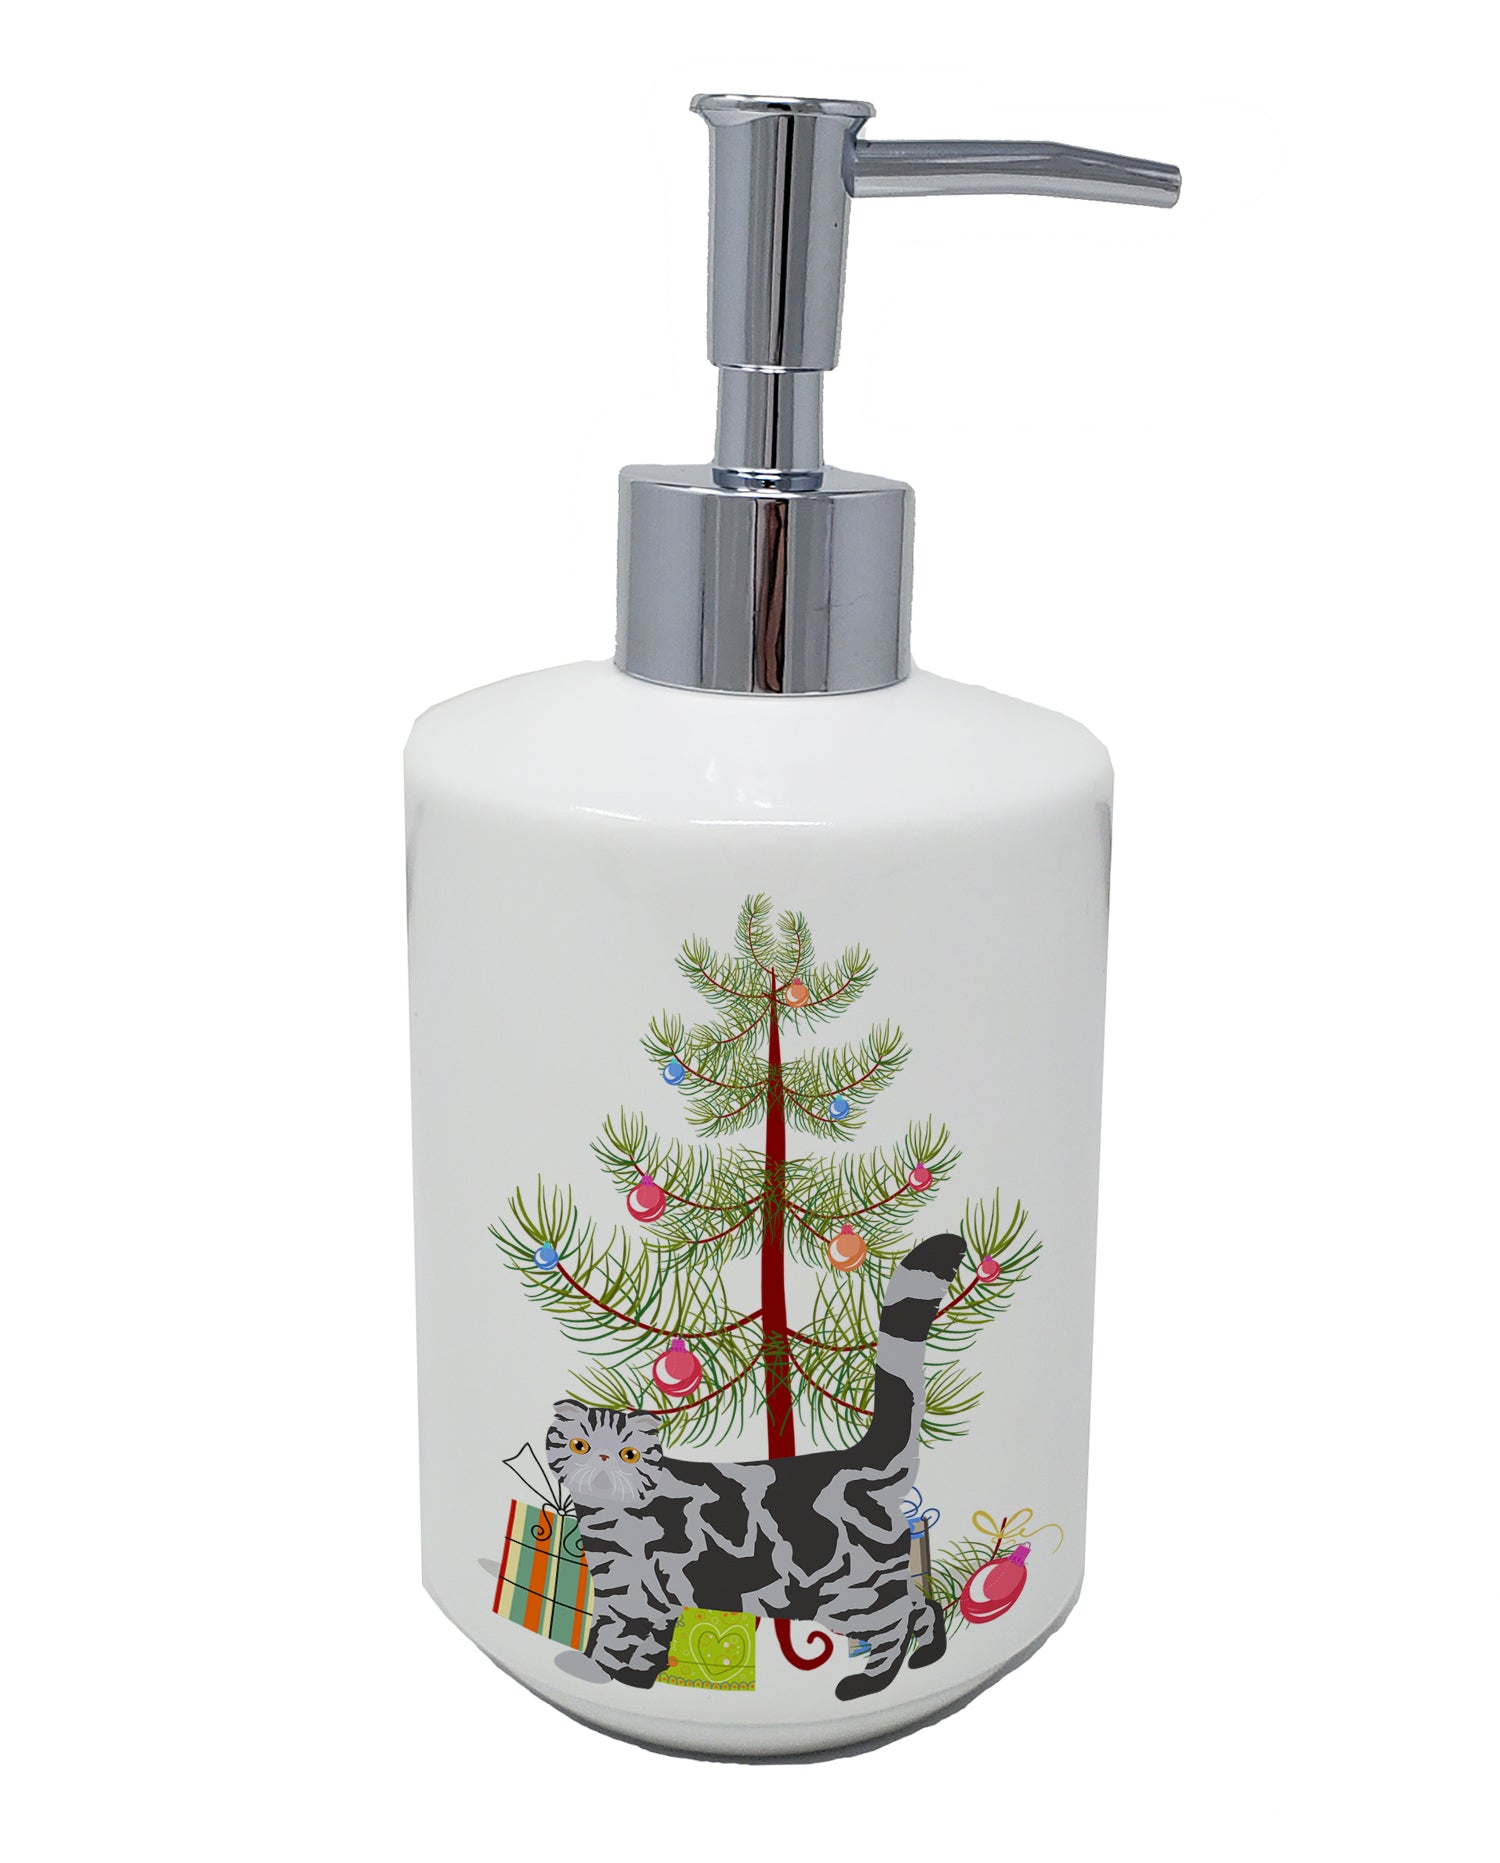 Buy this Foldex Exotic Fold #1 Cat Merry Christmas Ceramic Soap Dispenser